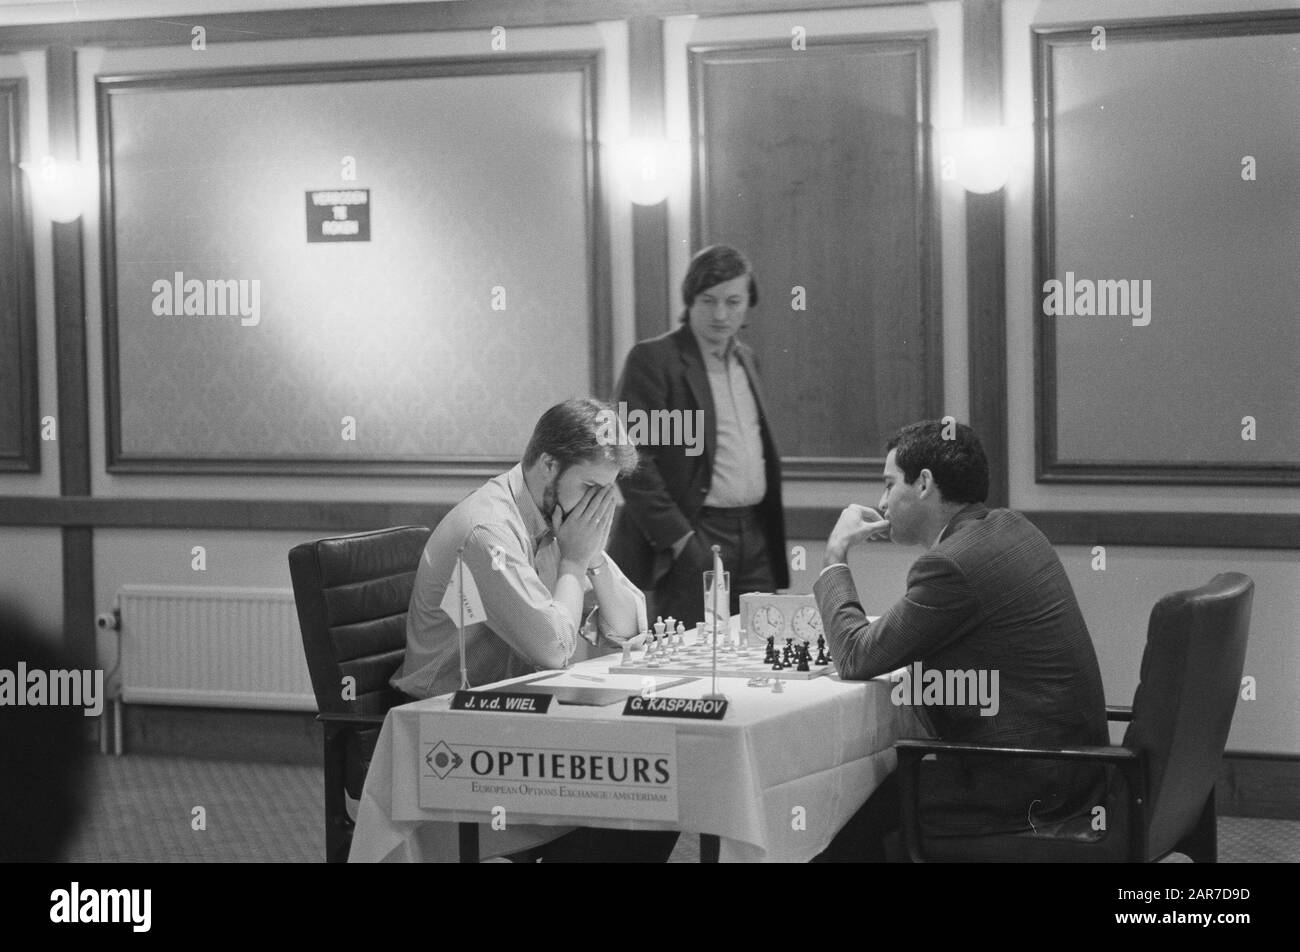 Kasparov vs Karpov in Moscow, 1984 : r/pics